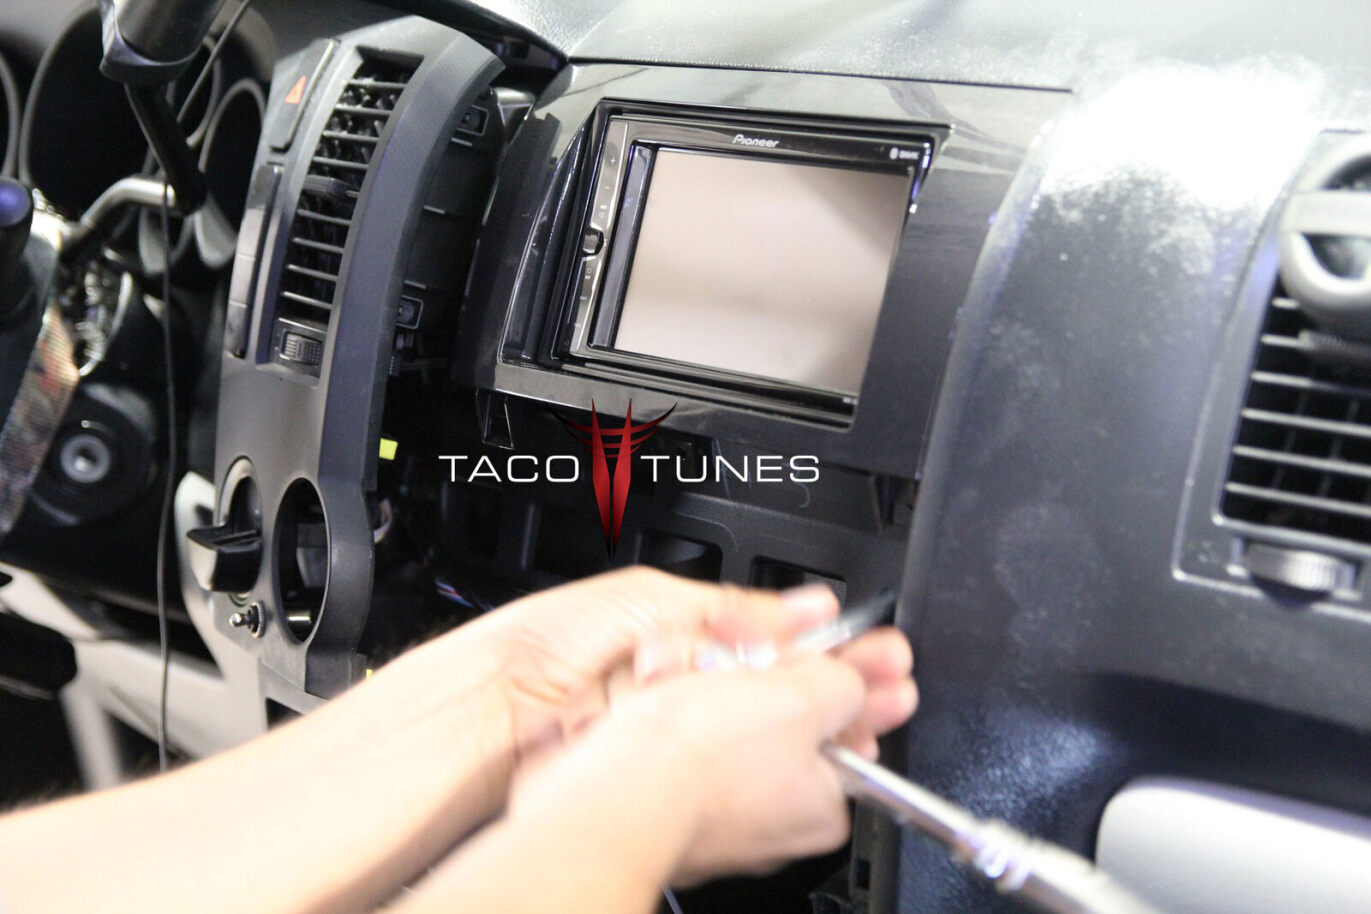 2007-2013 Toyota Tundra aftermarket stereo installation kit